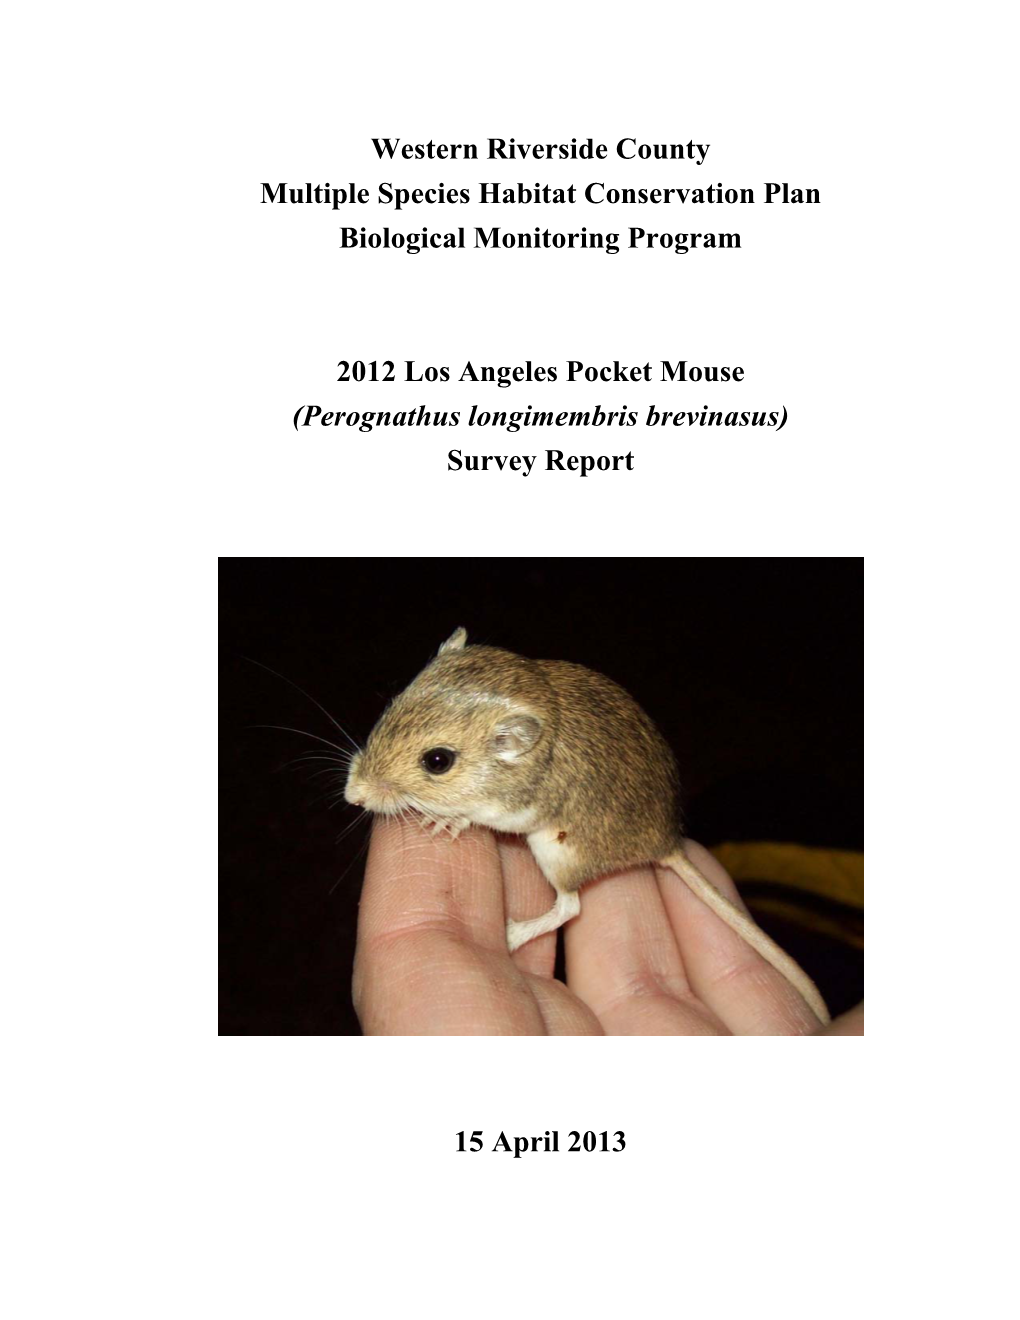 Los Angeles Pocket Mouse Survey Report 2012